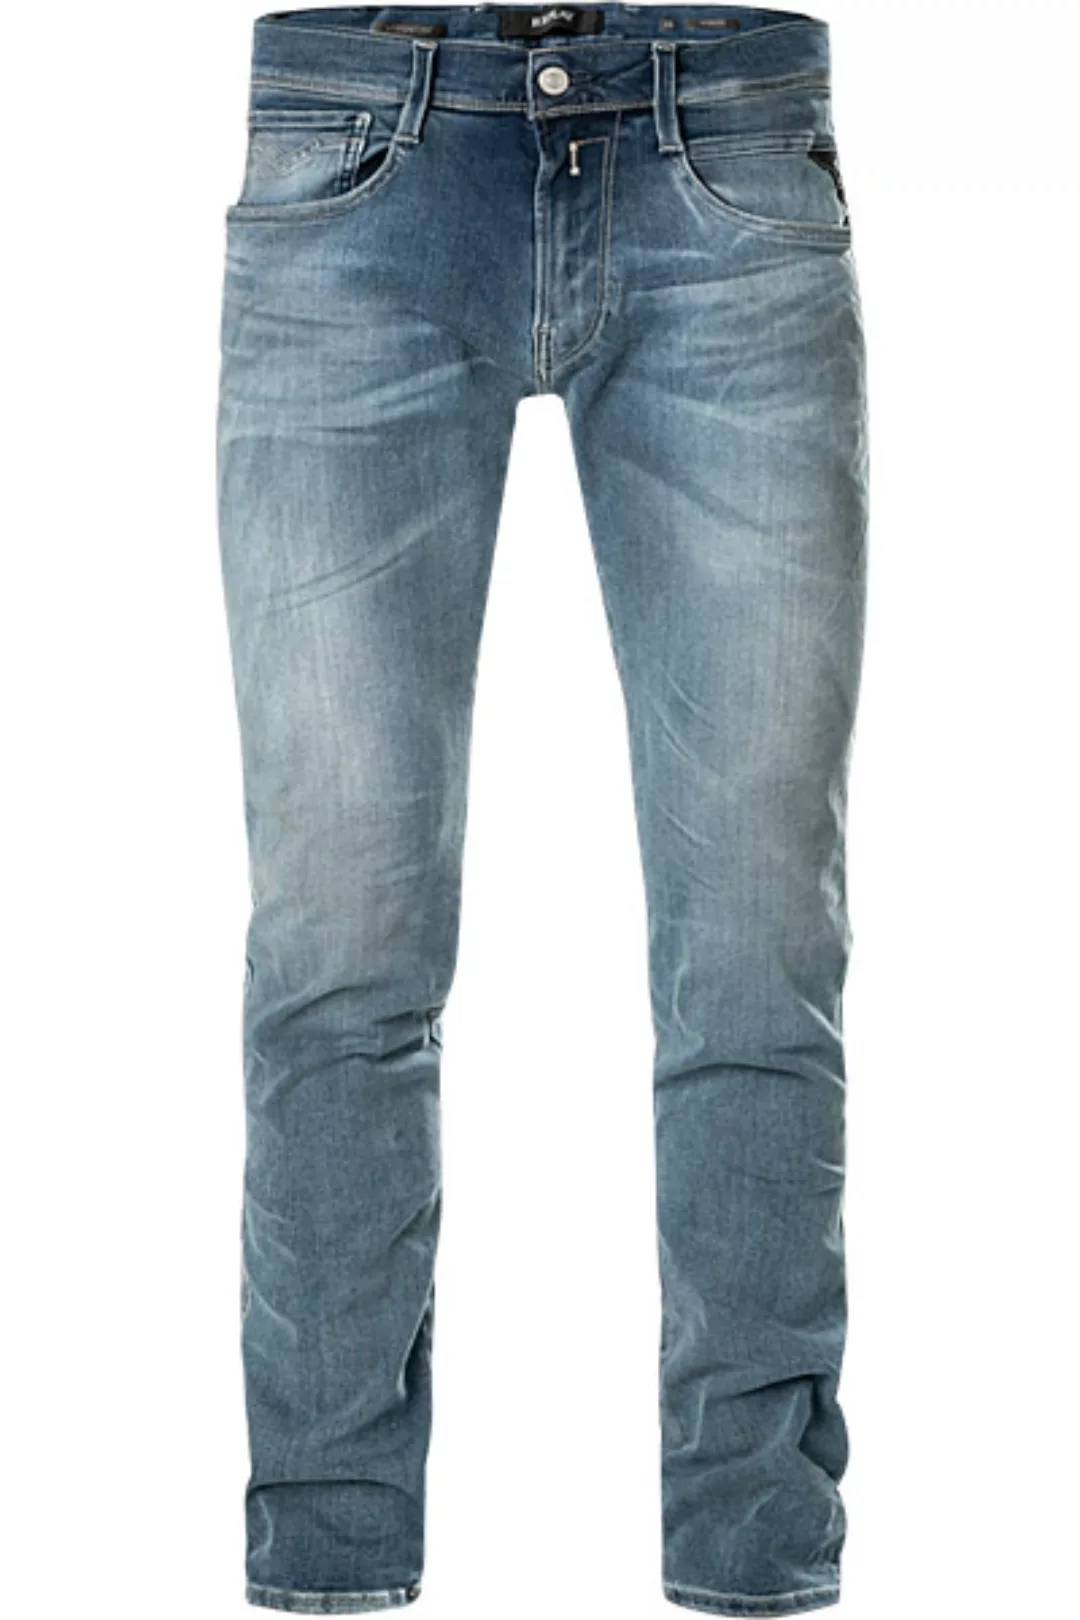 Replay M914y Anbass Jeans 27 Medium Blue günstig online kaufen